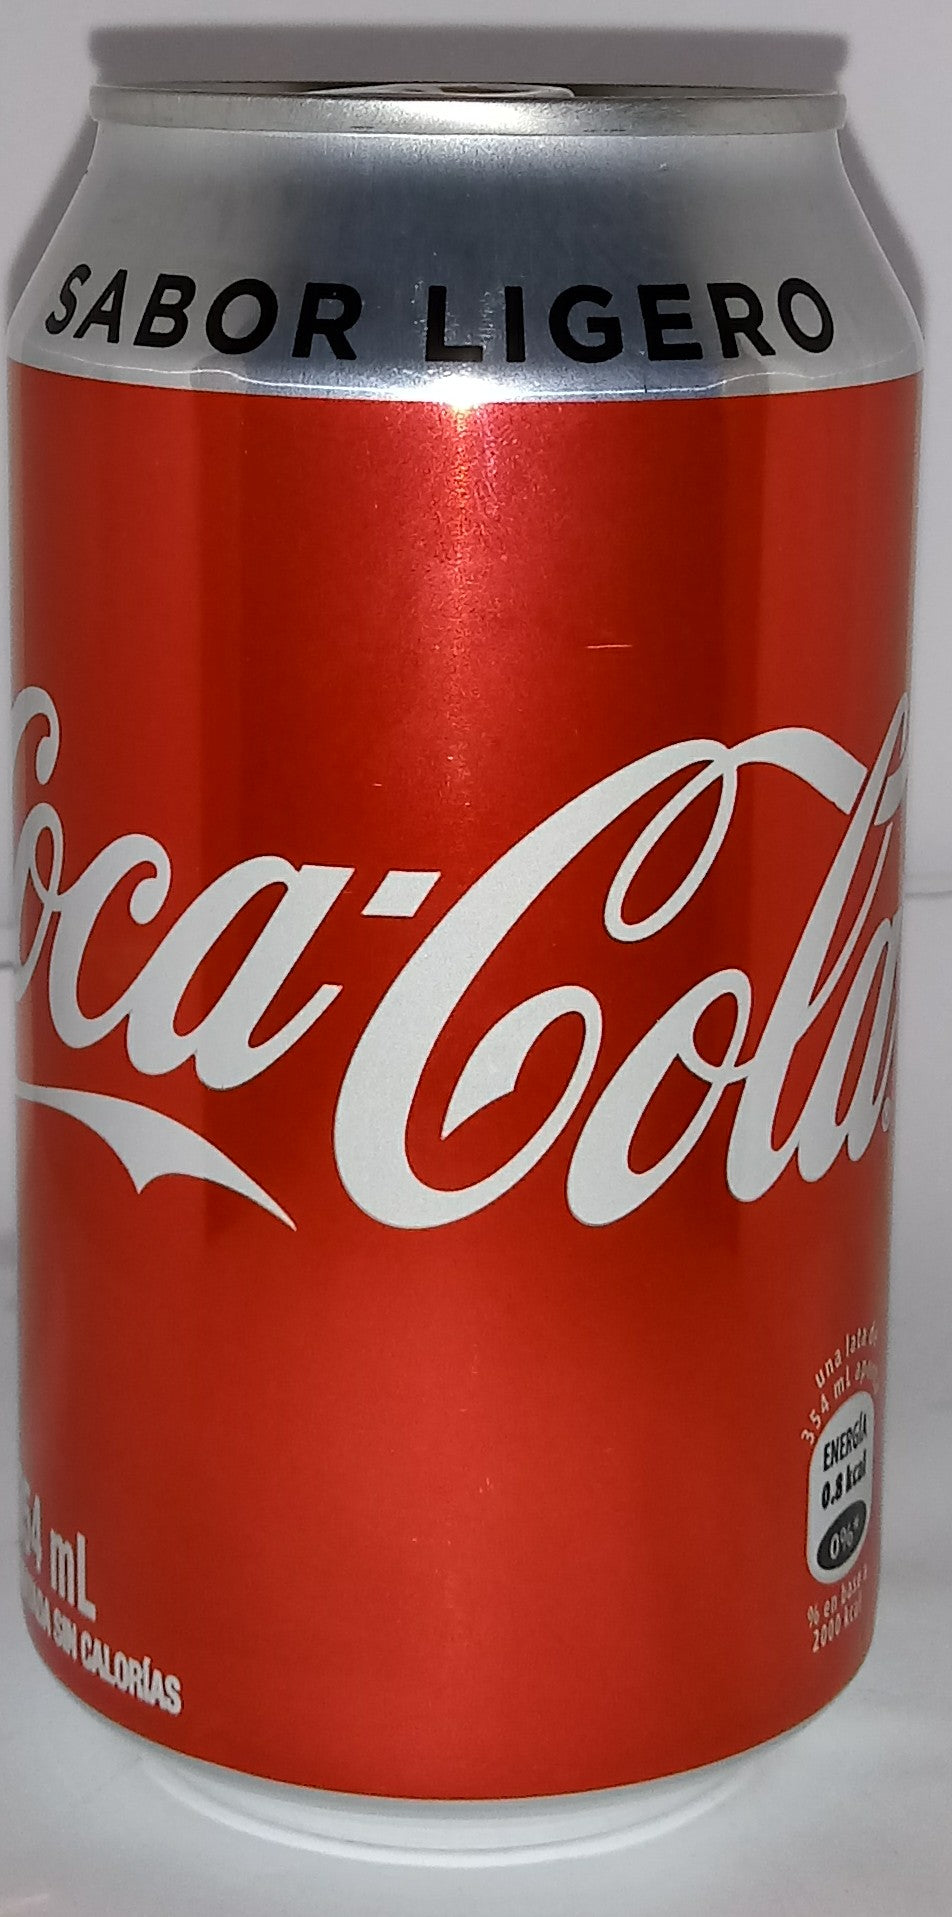 Coca Cola Sabor Ligero lata 354ml